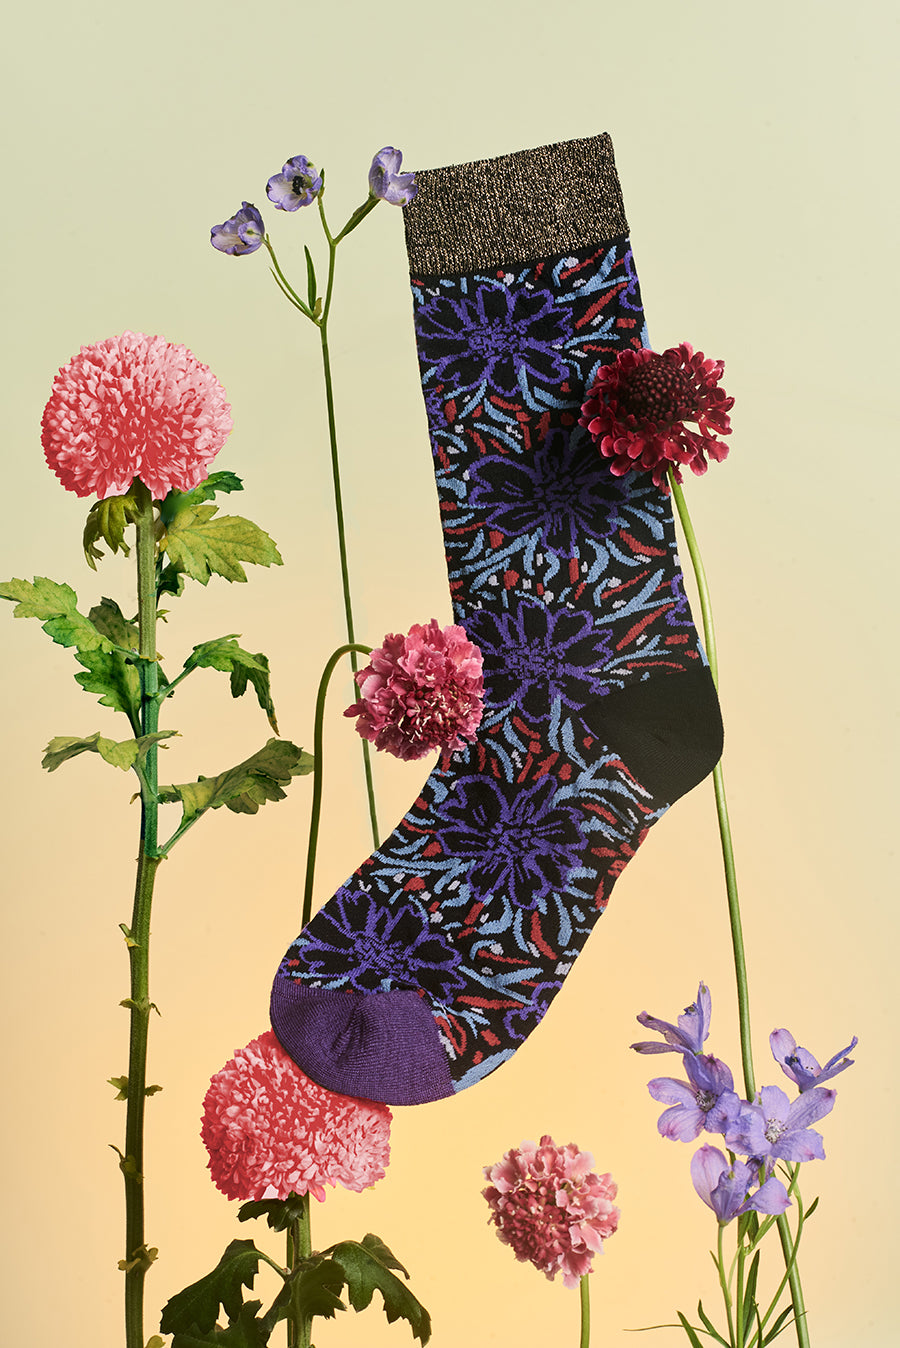 Socks / JNBY Daisy Prints Socks